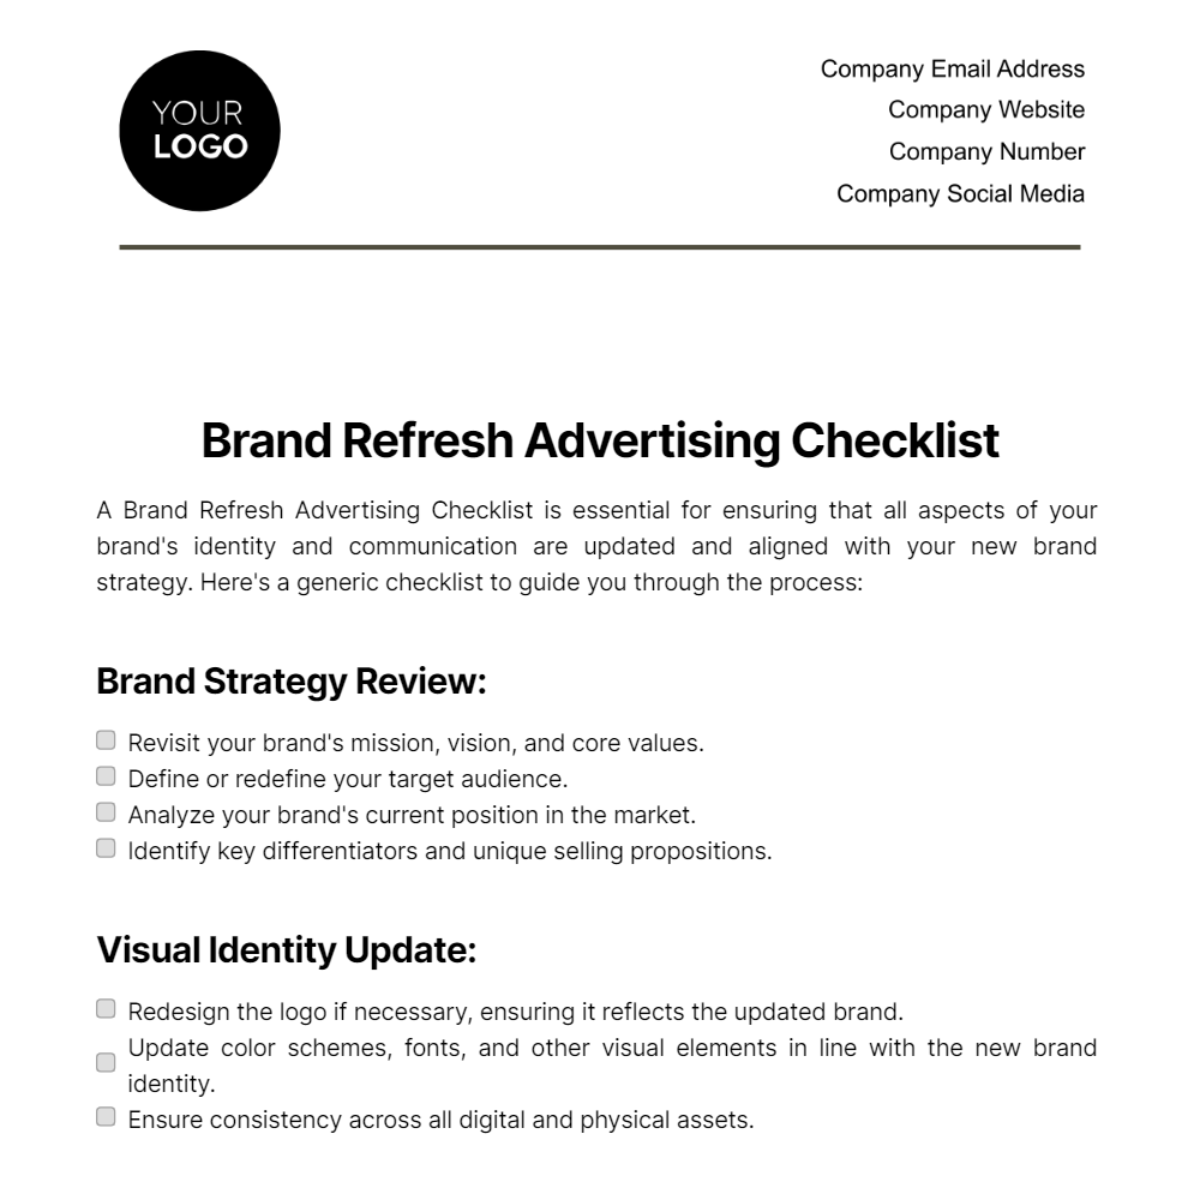 Brand Refresh Advertising Checklist Template